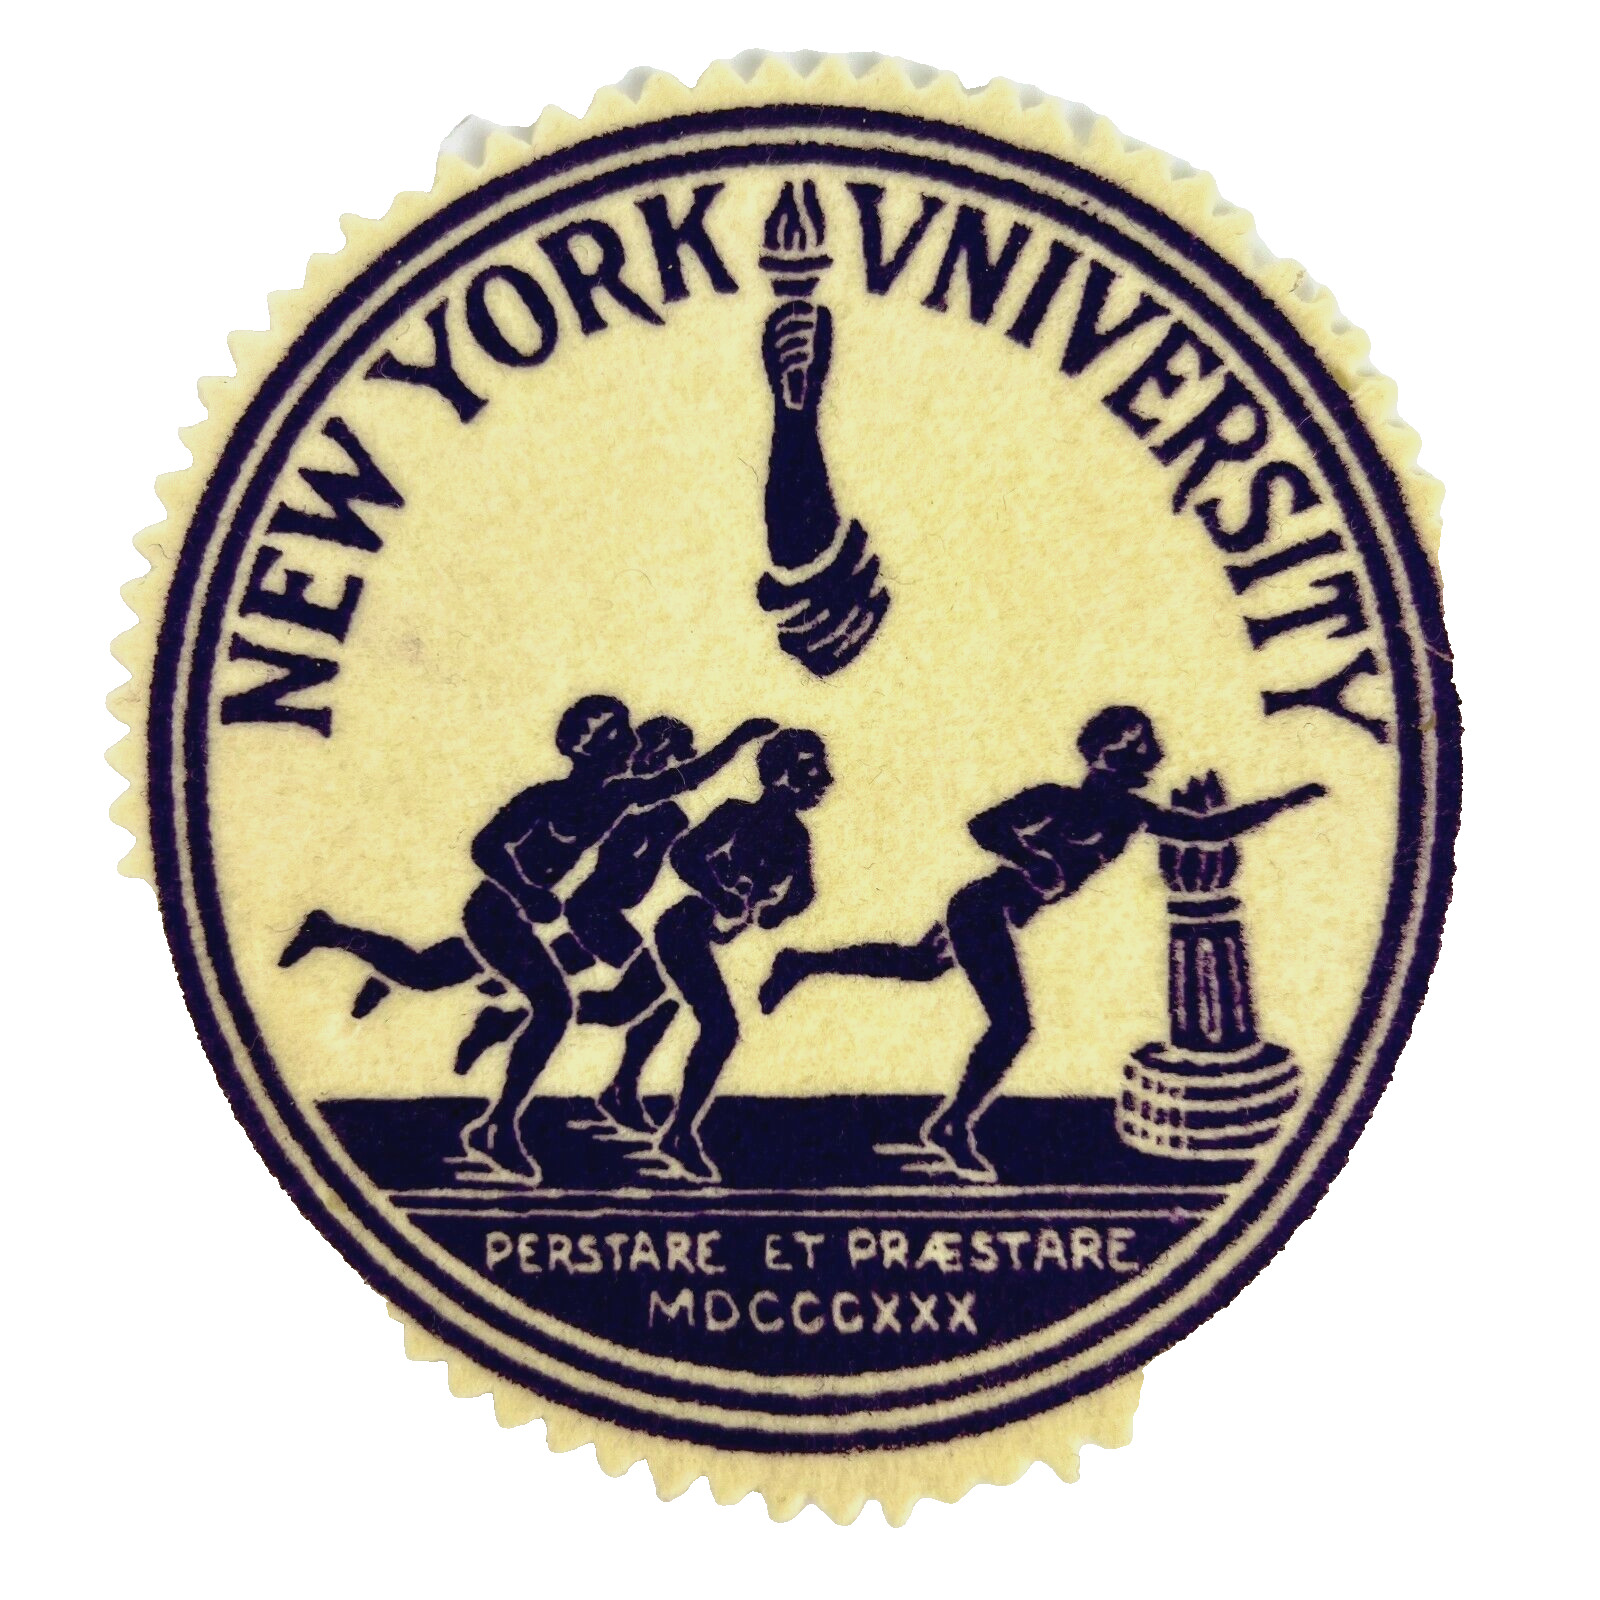 Vintage NYU Seal 1950s New York University Felt Perstare Et Praestare MDCCCXX